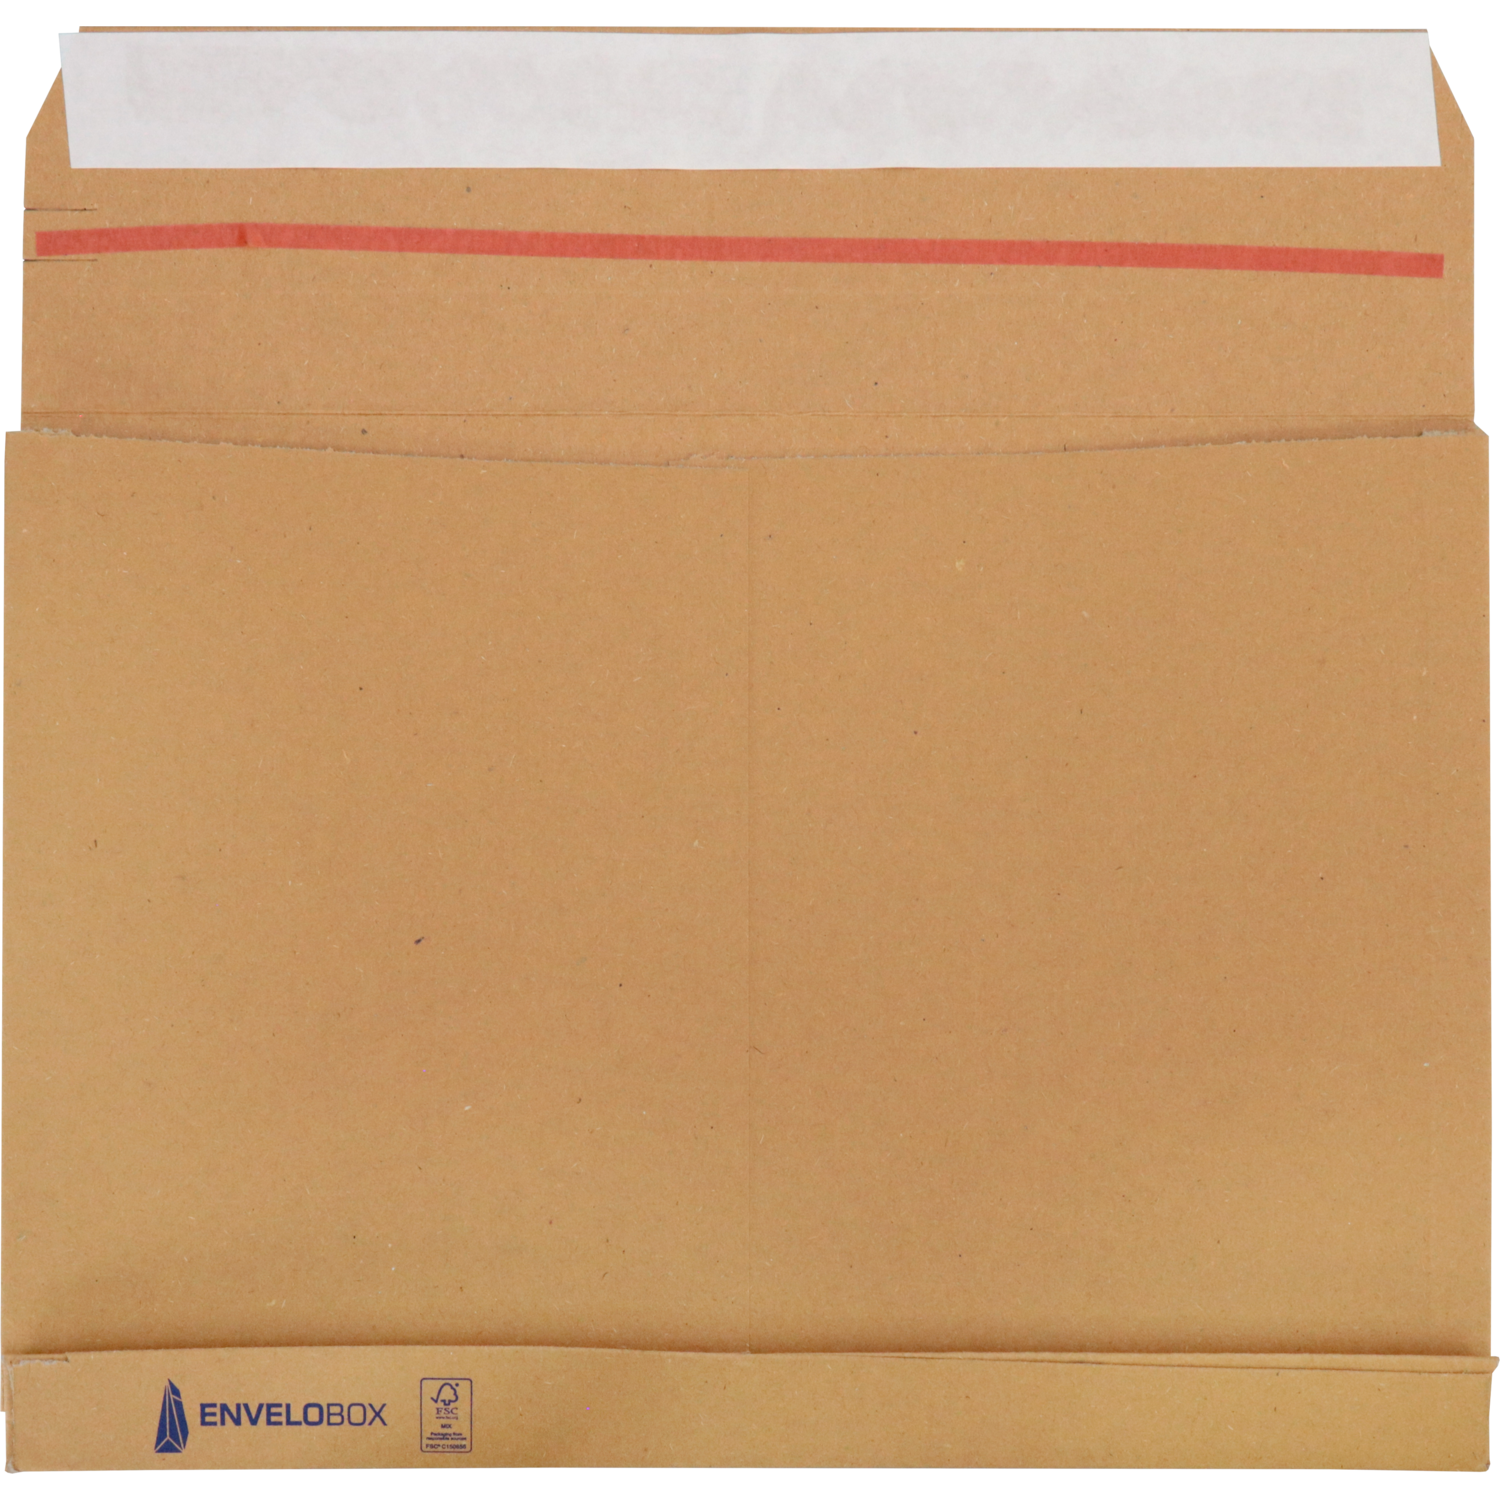 Envelop, Envelobox, 350x250x30mm, bruin 1